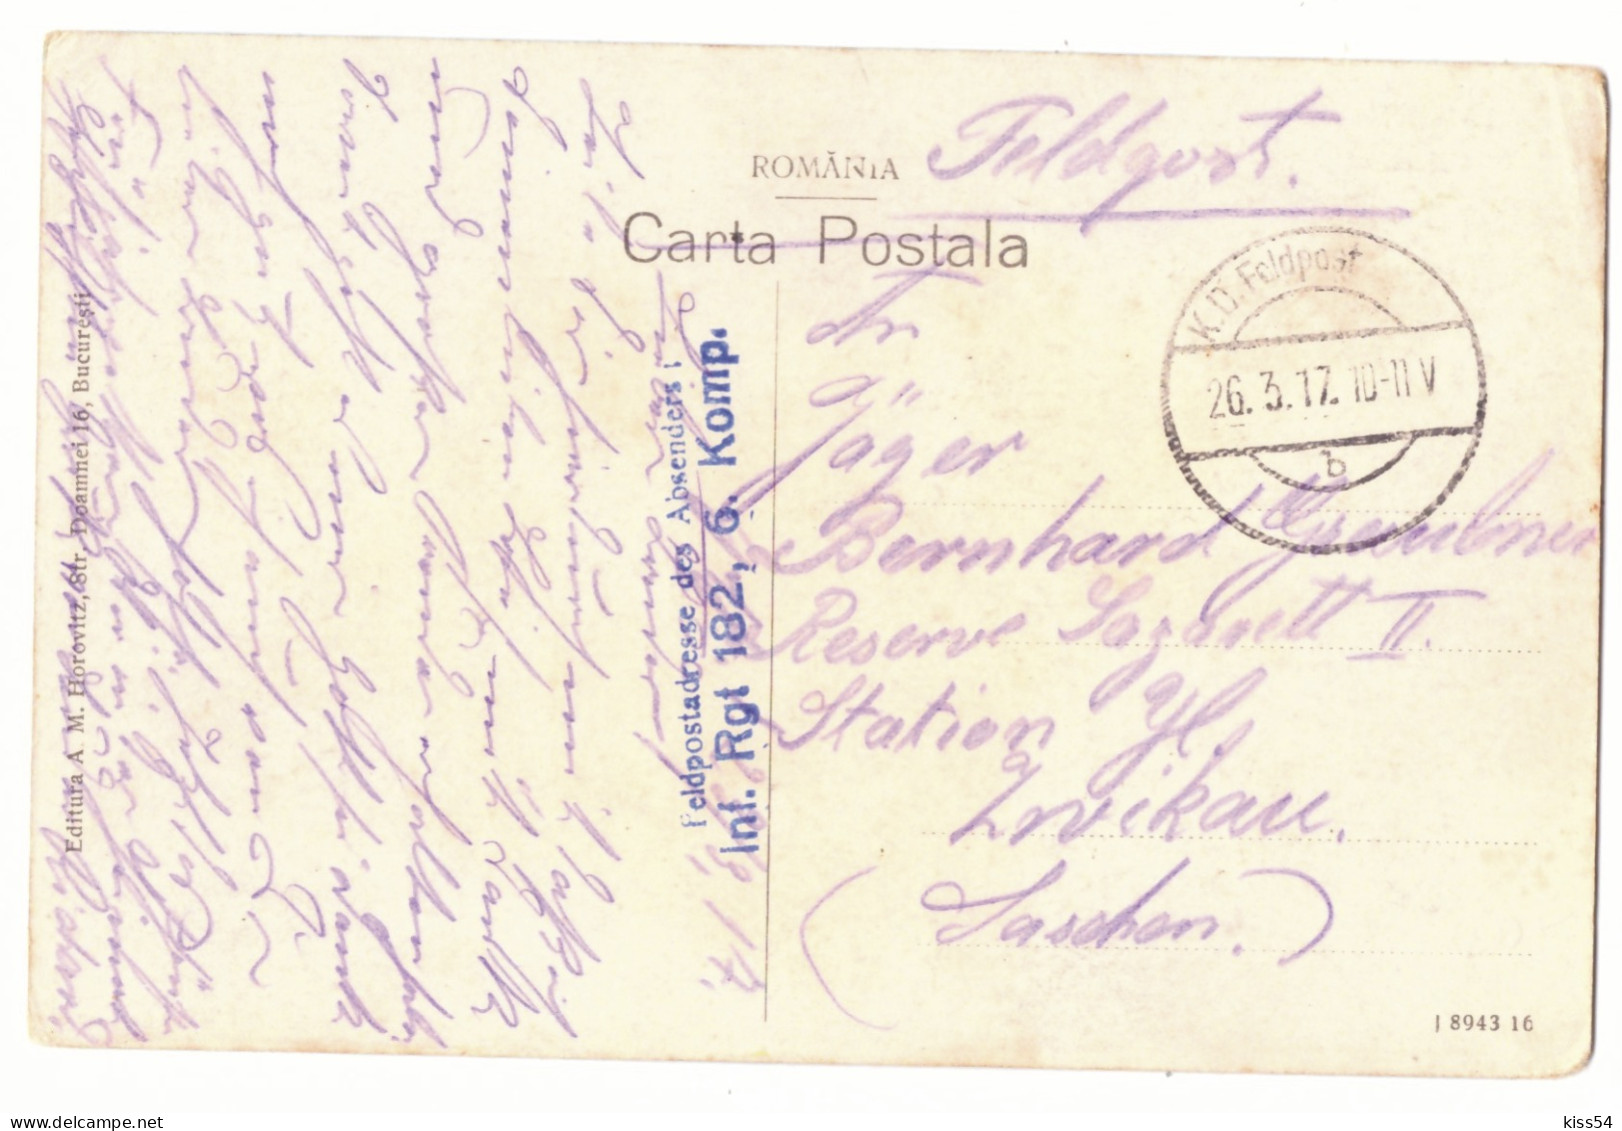 RO 52 - 19911 RM. VALCEA, Ave. Tudor Vladimirescu, Romania - Old Postcard, CENSOR - Used - 1917 - Rumänien